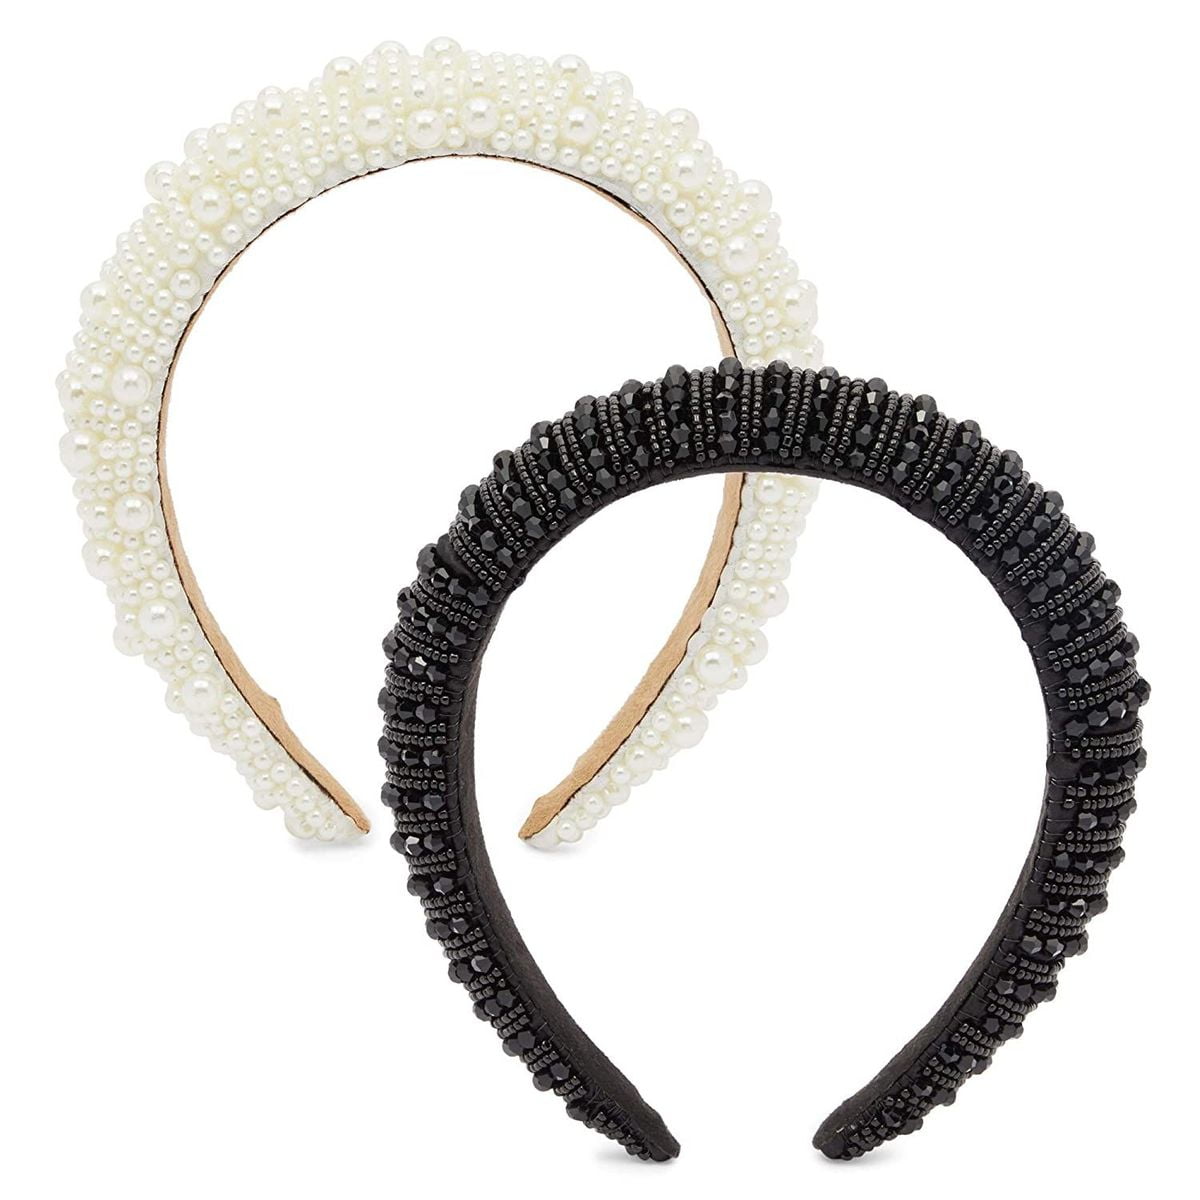 Black headband with white and grey pearls Hair Band Rhinestone